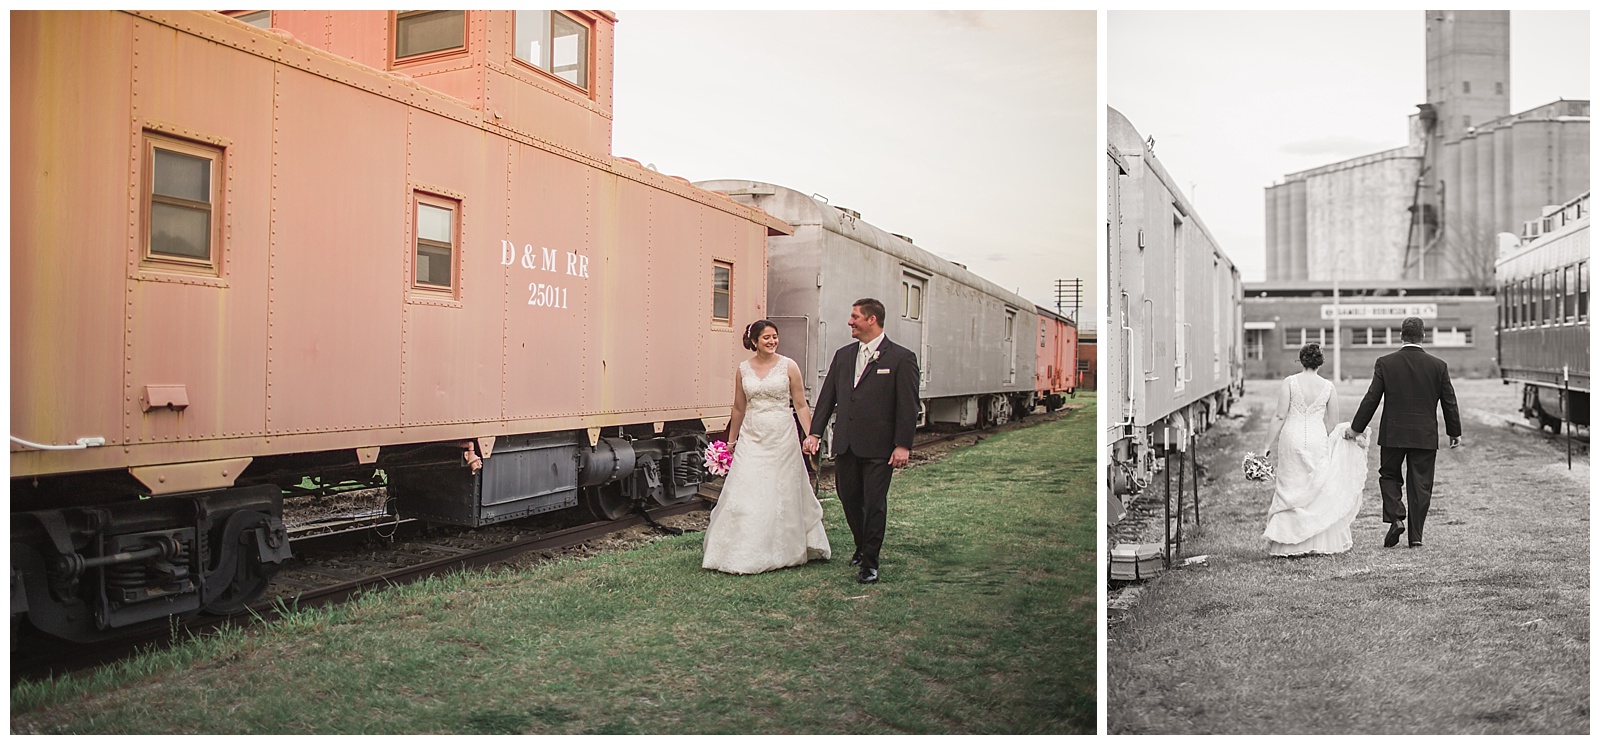 Wedding photography at Great Overland Station in Topeka, Kansas.